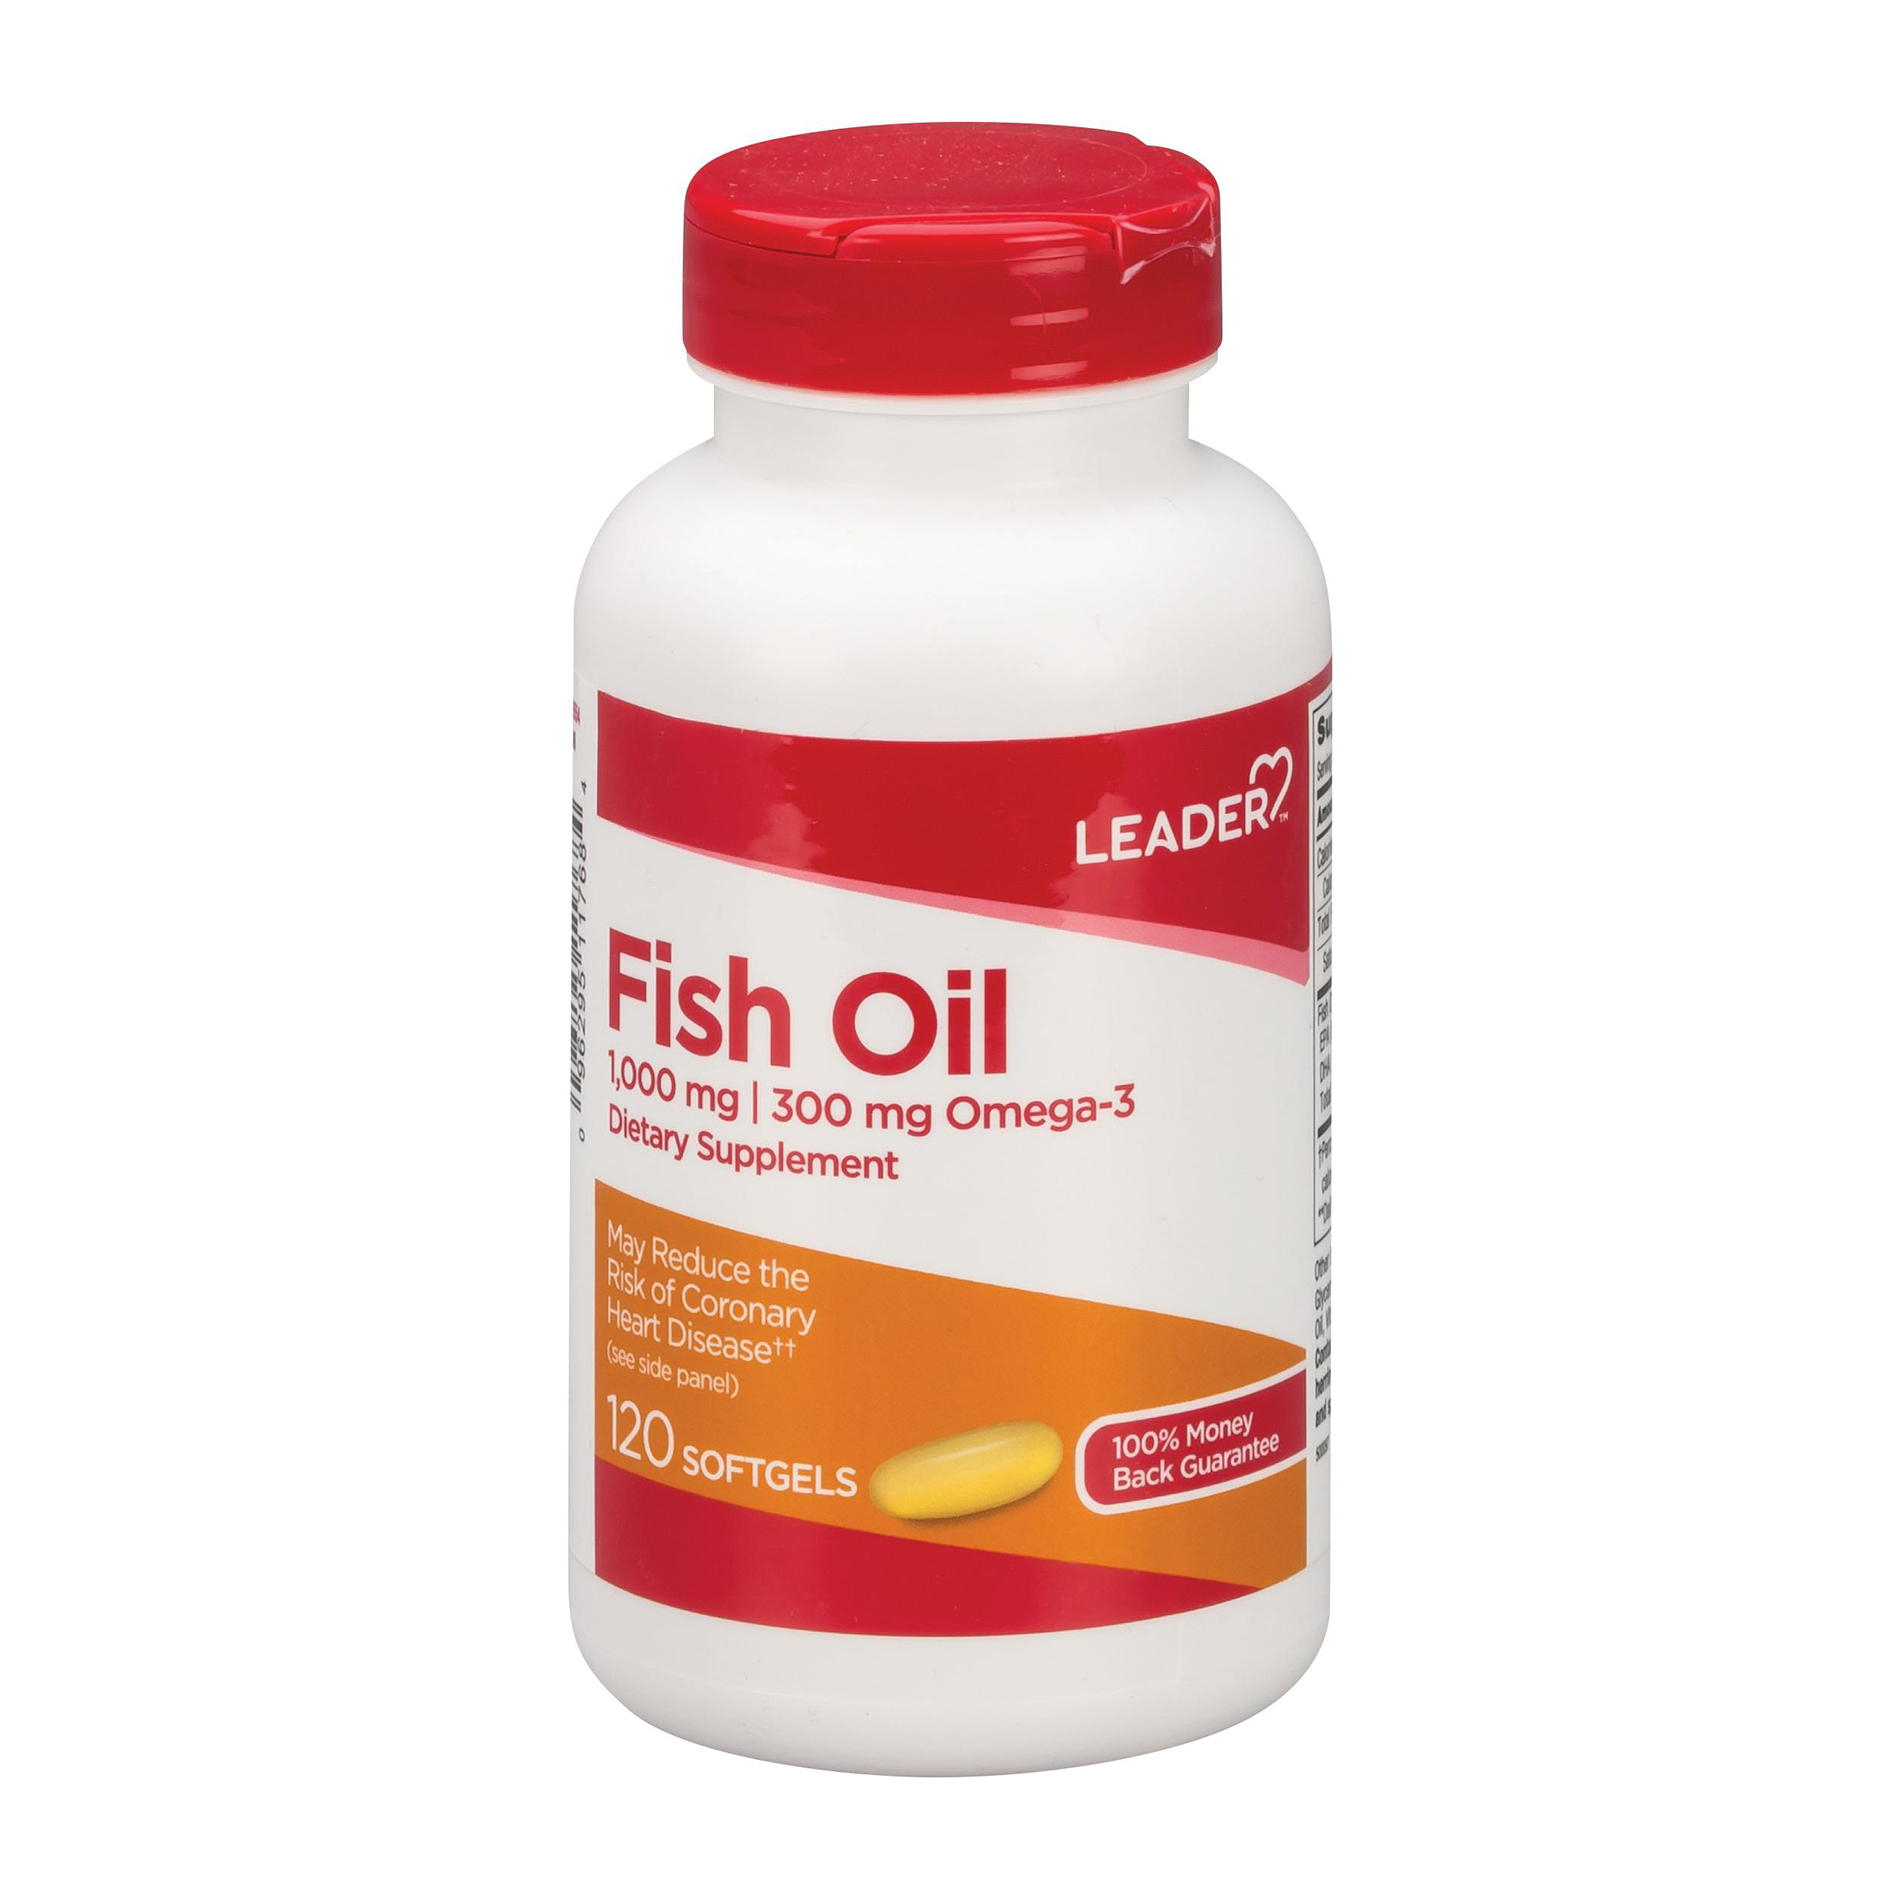 Leader Fish Oil Omega-3 1000mg Softgels - 120 Count